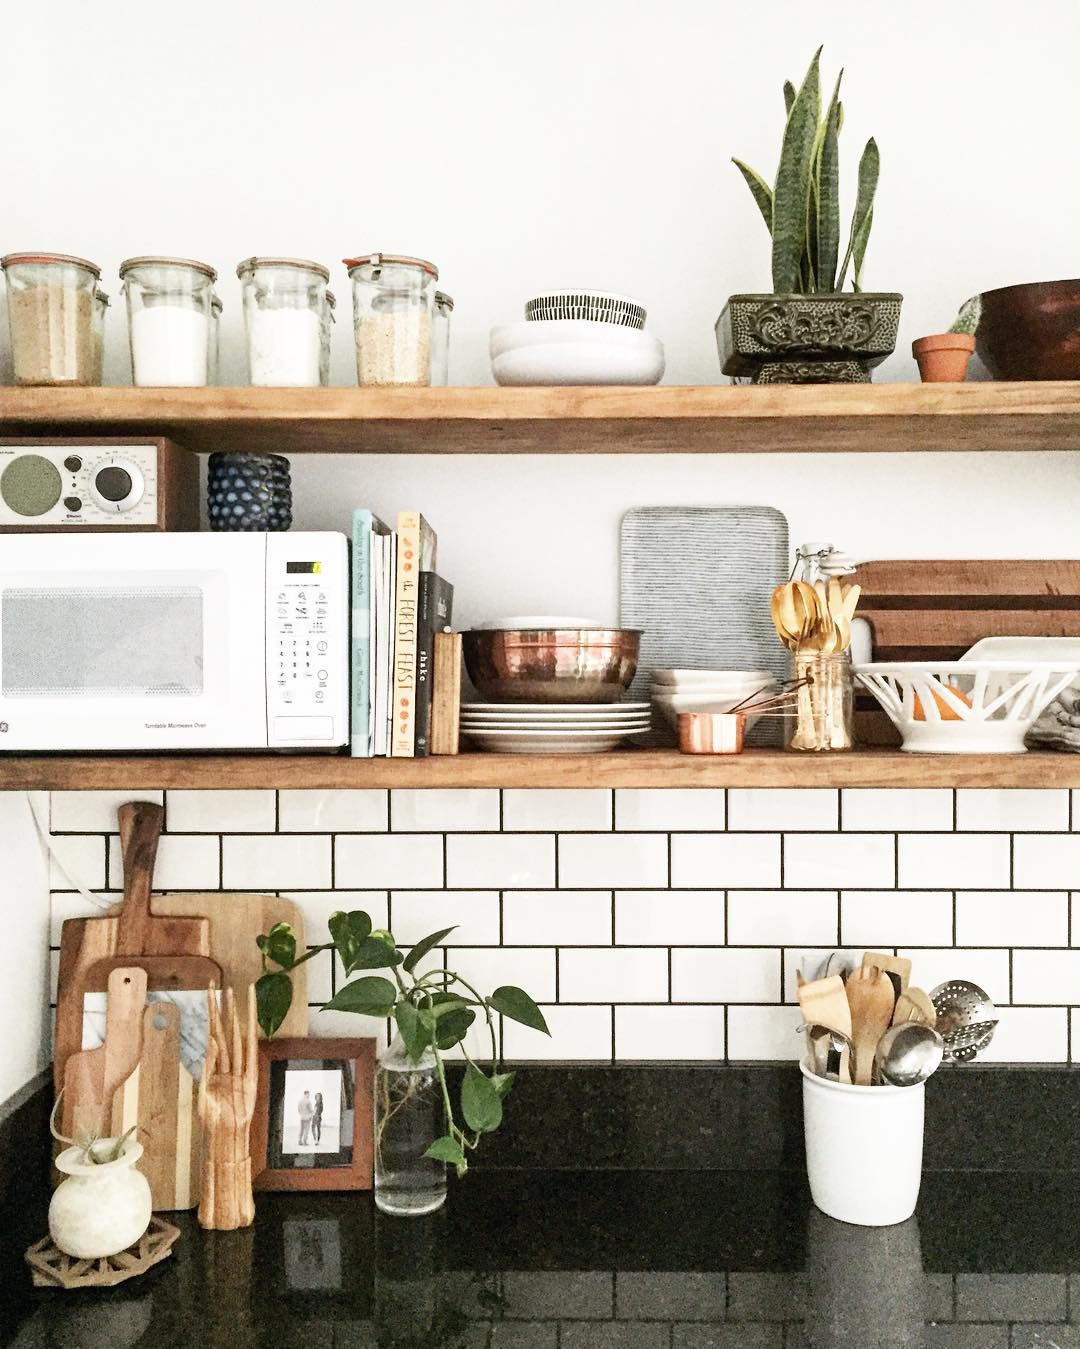 10 Stylish Ways to Display Cookbooks in the Kitchen